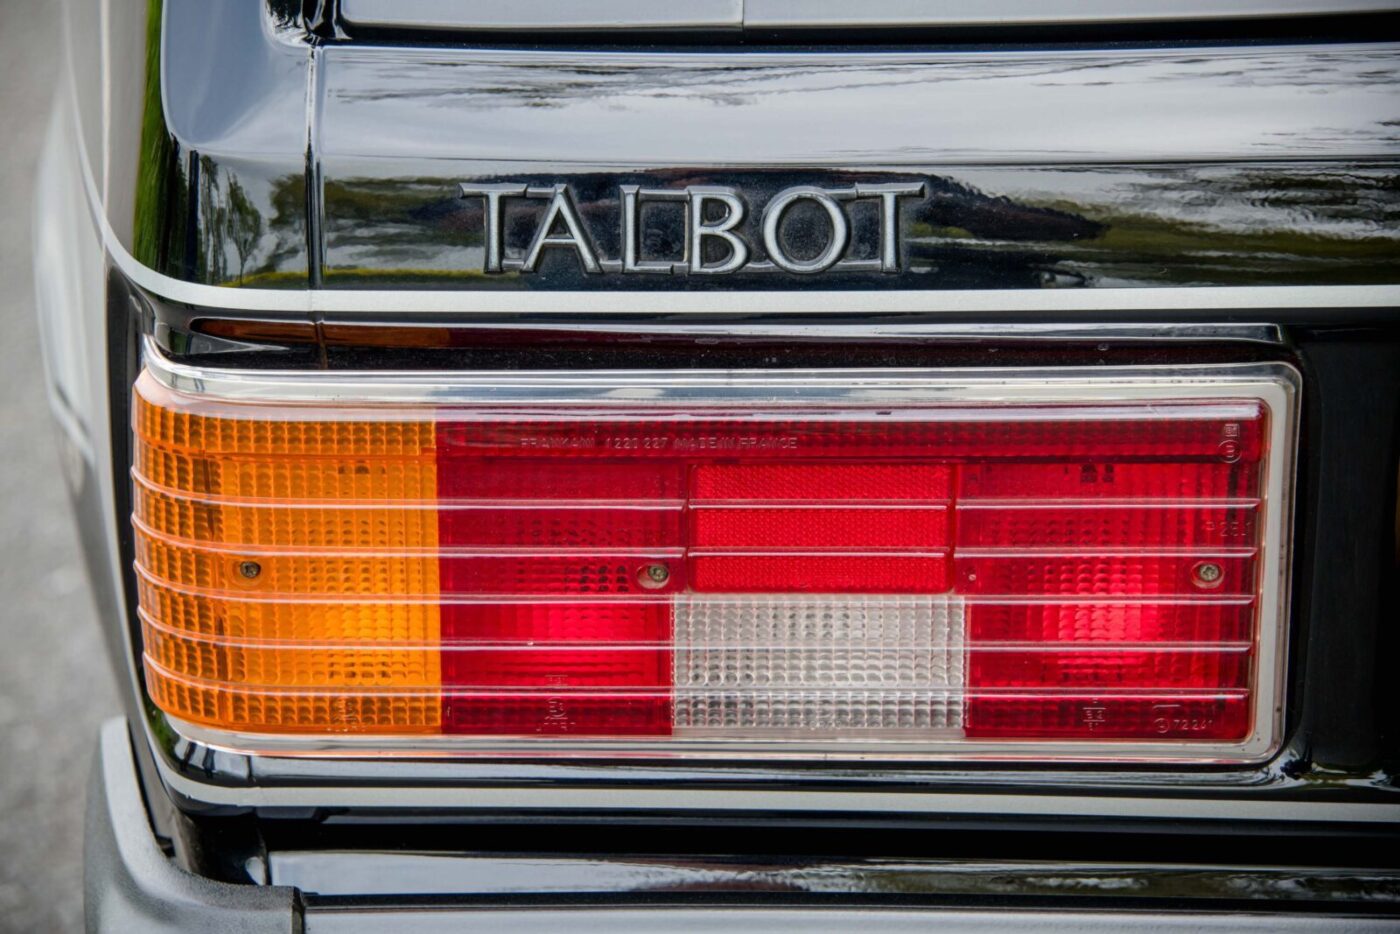 Talbot Sunbeam Lotus rear light